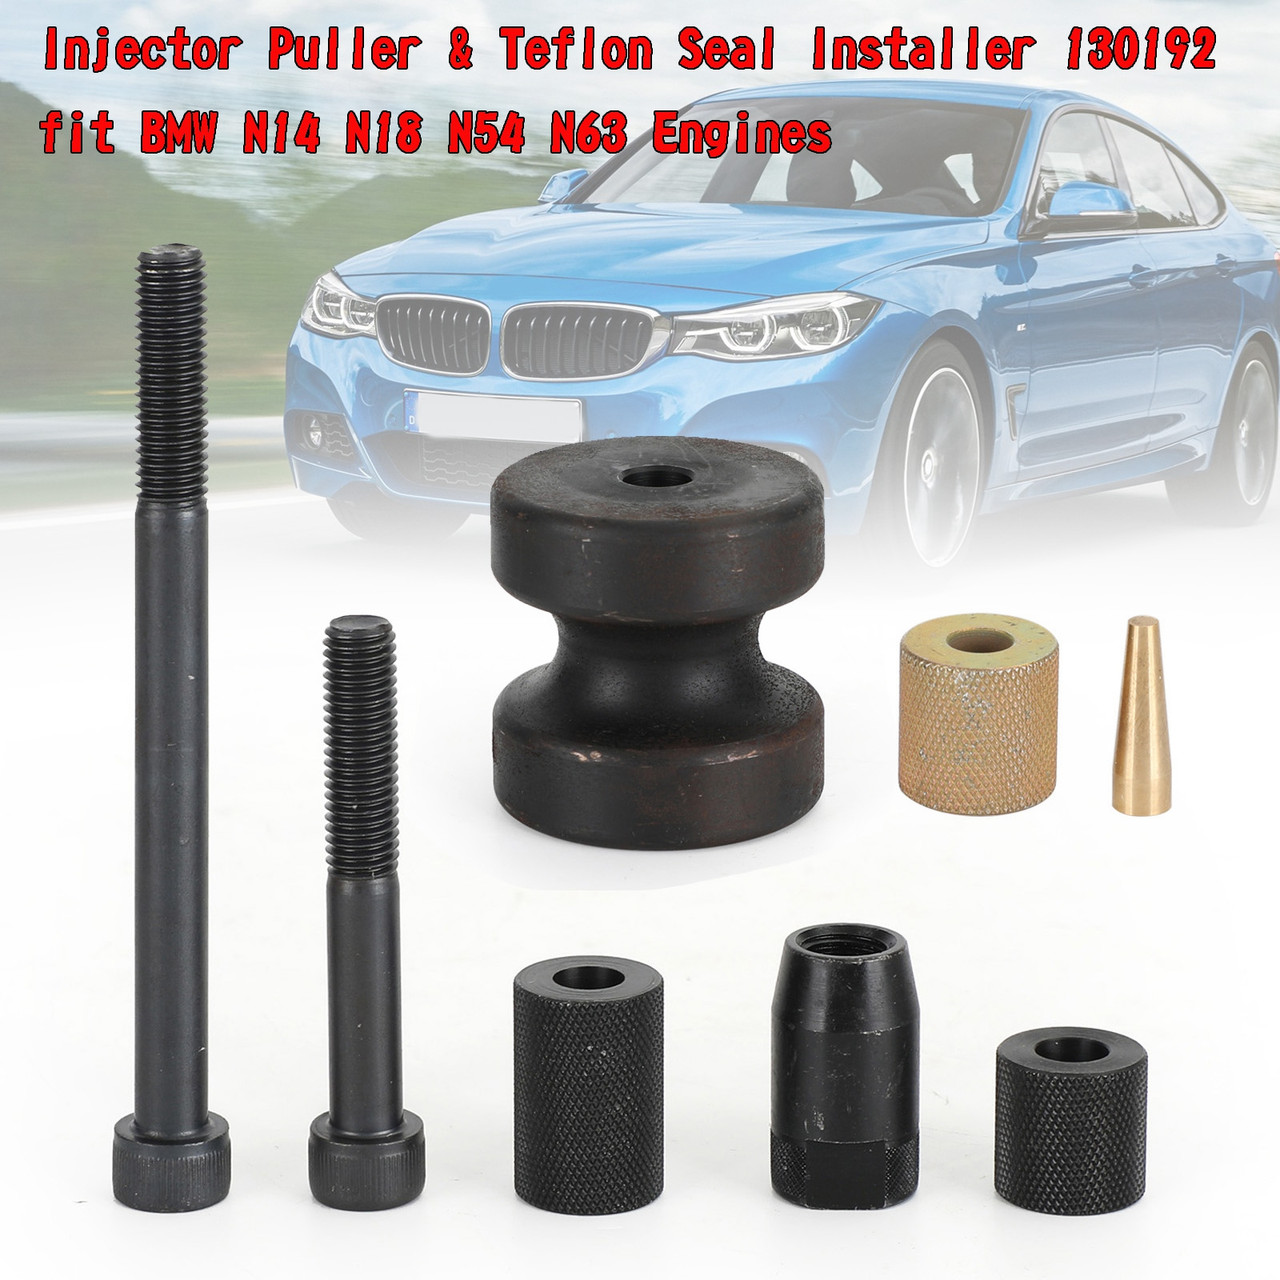 Injector Puller & Teflon Seal Installer 130192 Fit For BMW N14, N18, N54 and N63 engine 550i GT 2010-2013